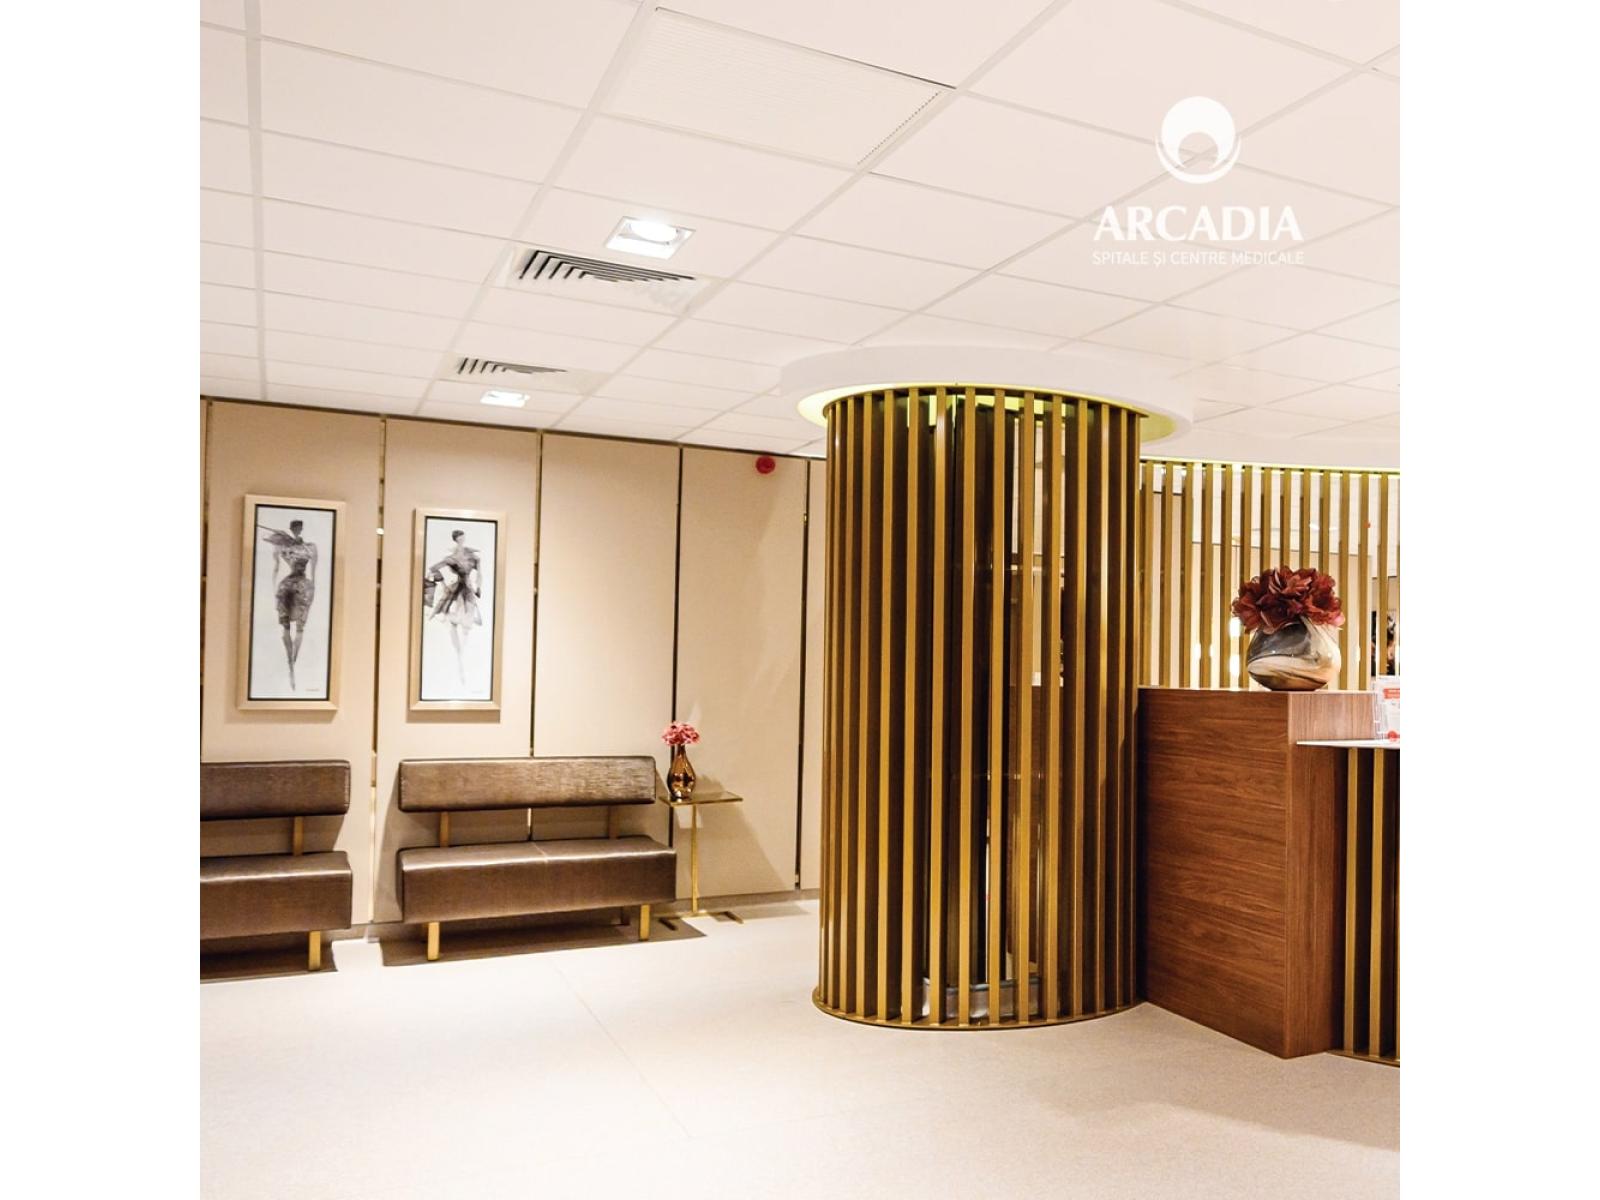 Arcadia - Spitale și Centre Medicale - wm-2022-articol_6.jpg